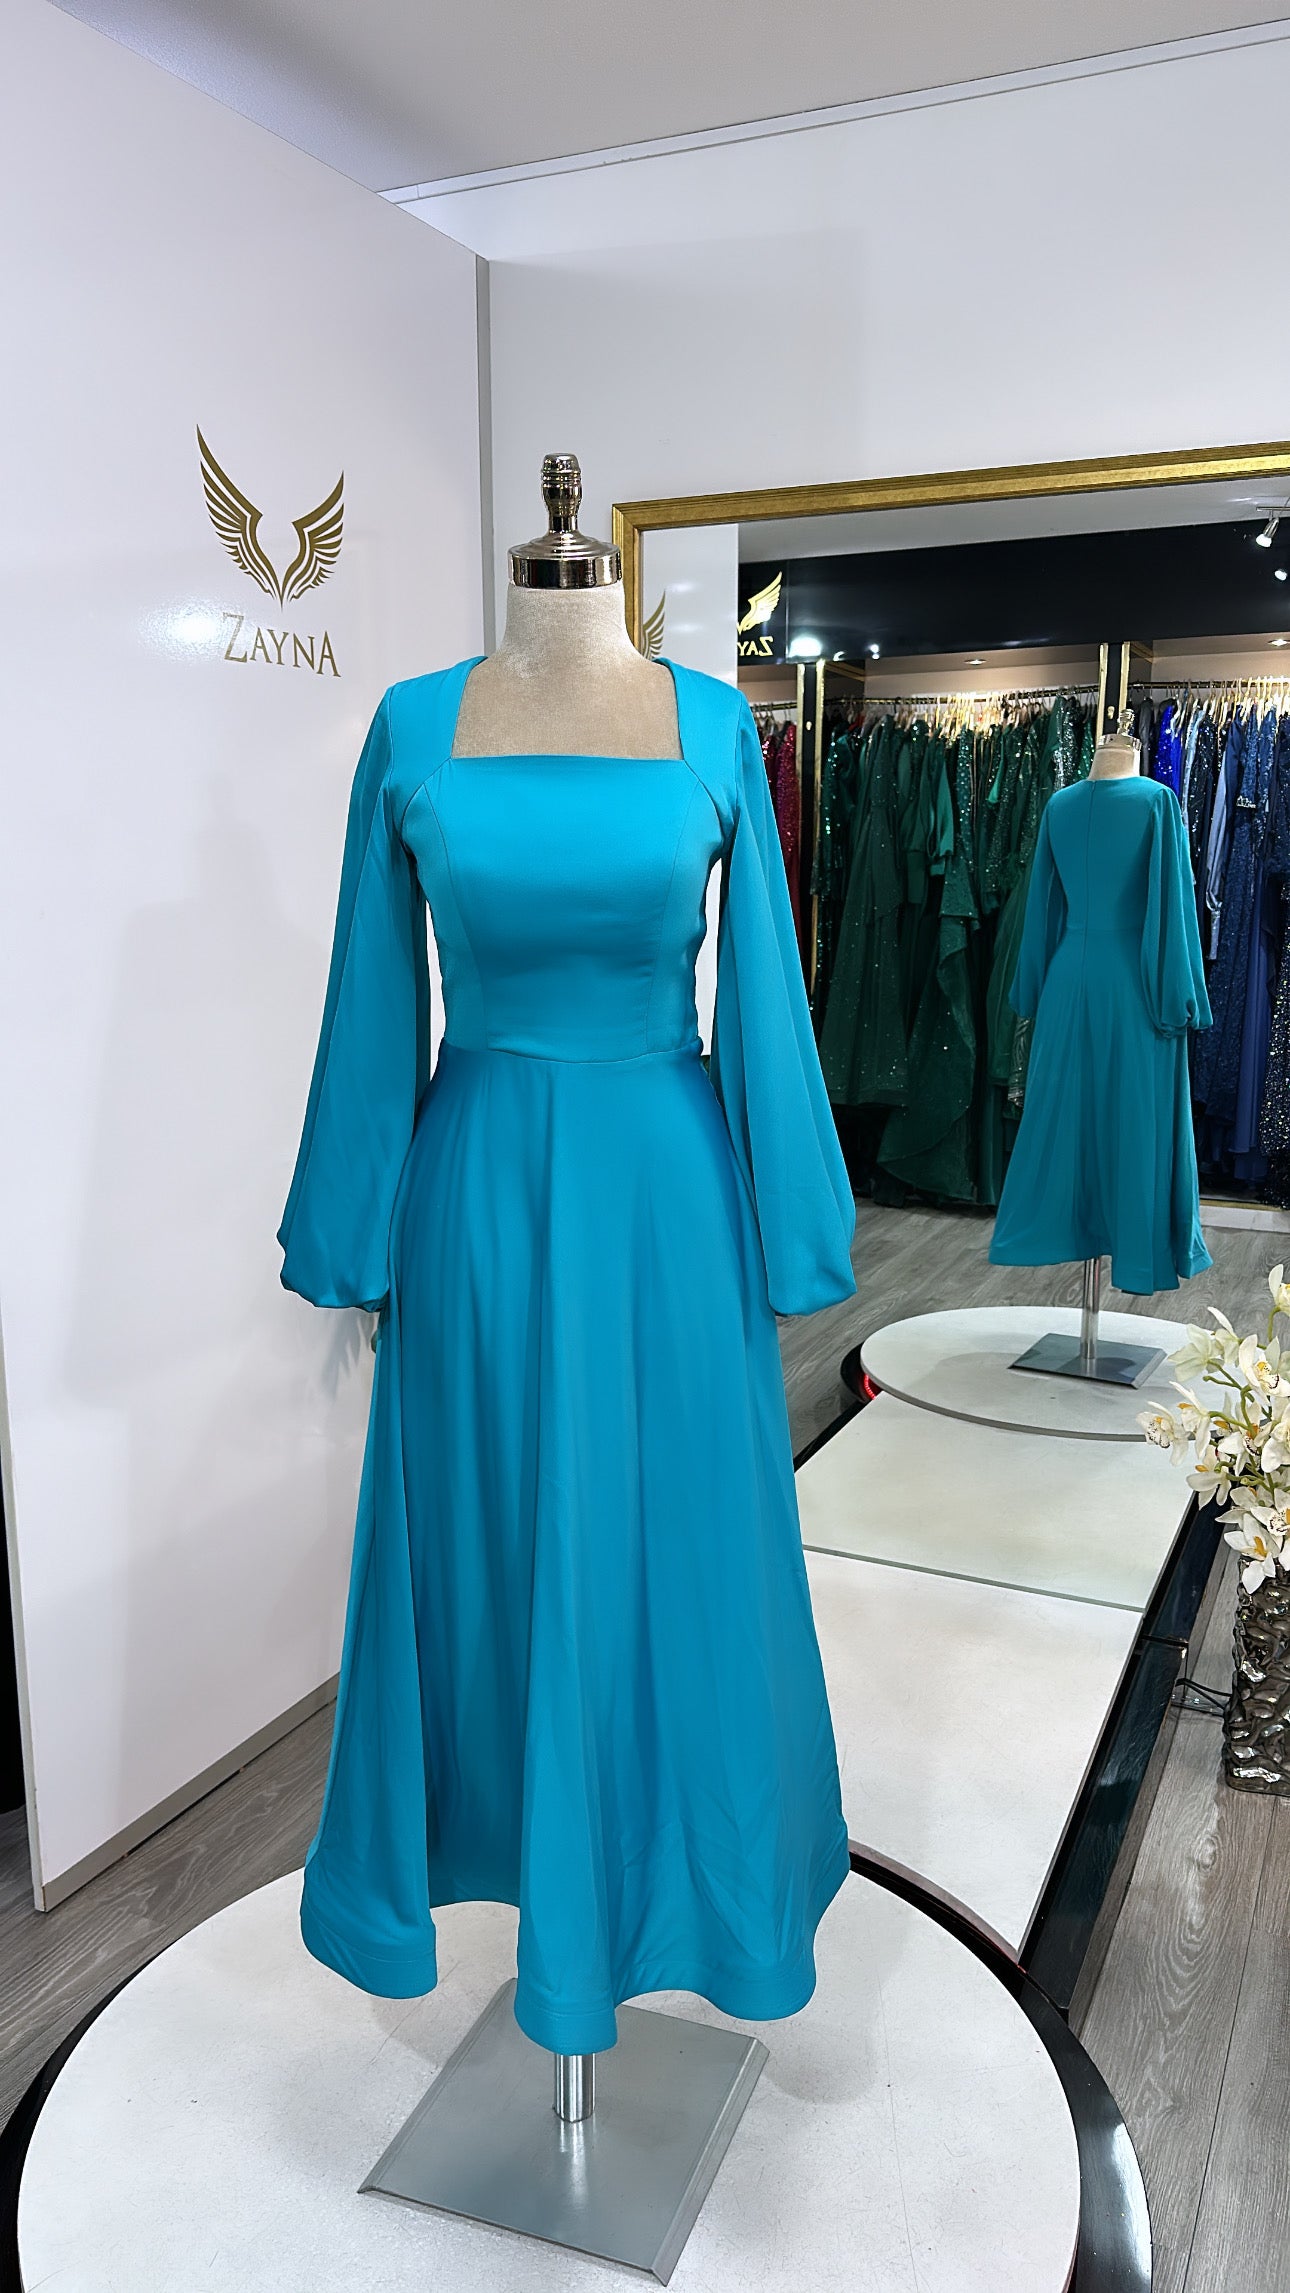 The Elsa dress